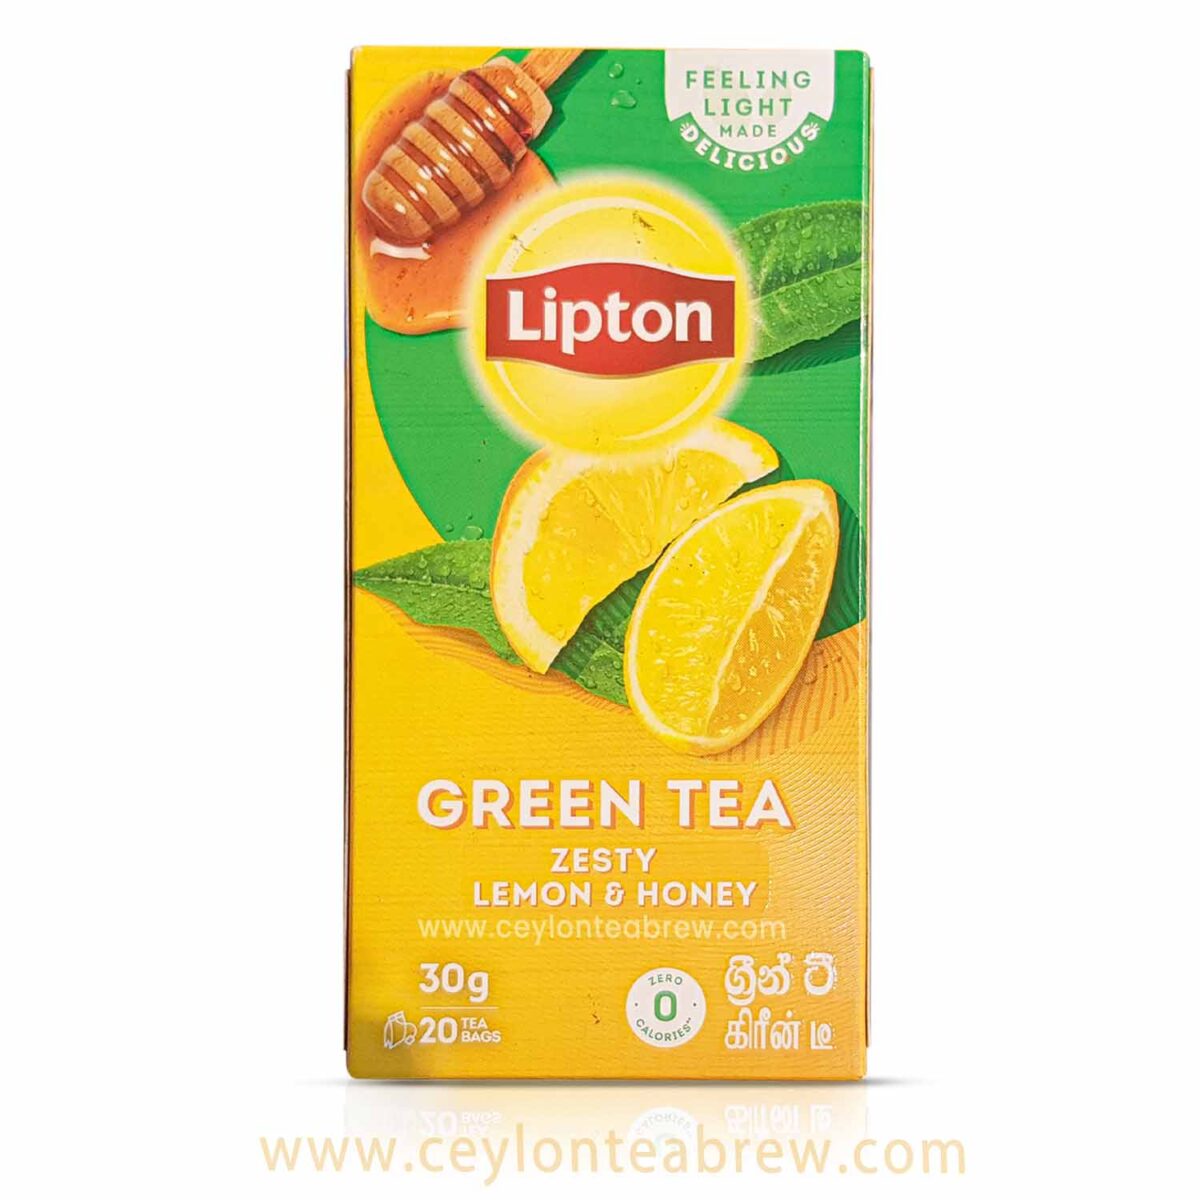 Lipton Ceylon green tea with Zesty lemon and honey flavored tea bags